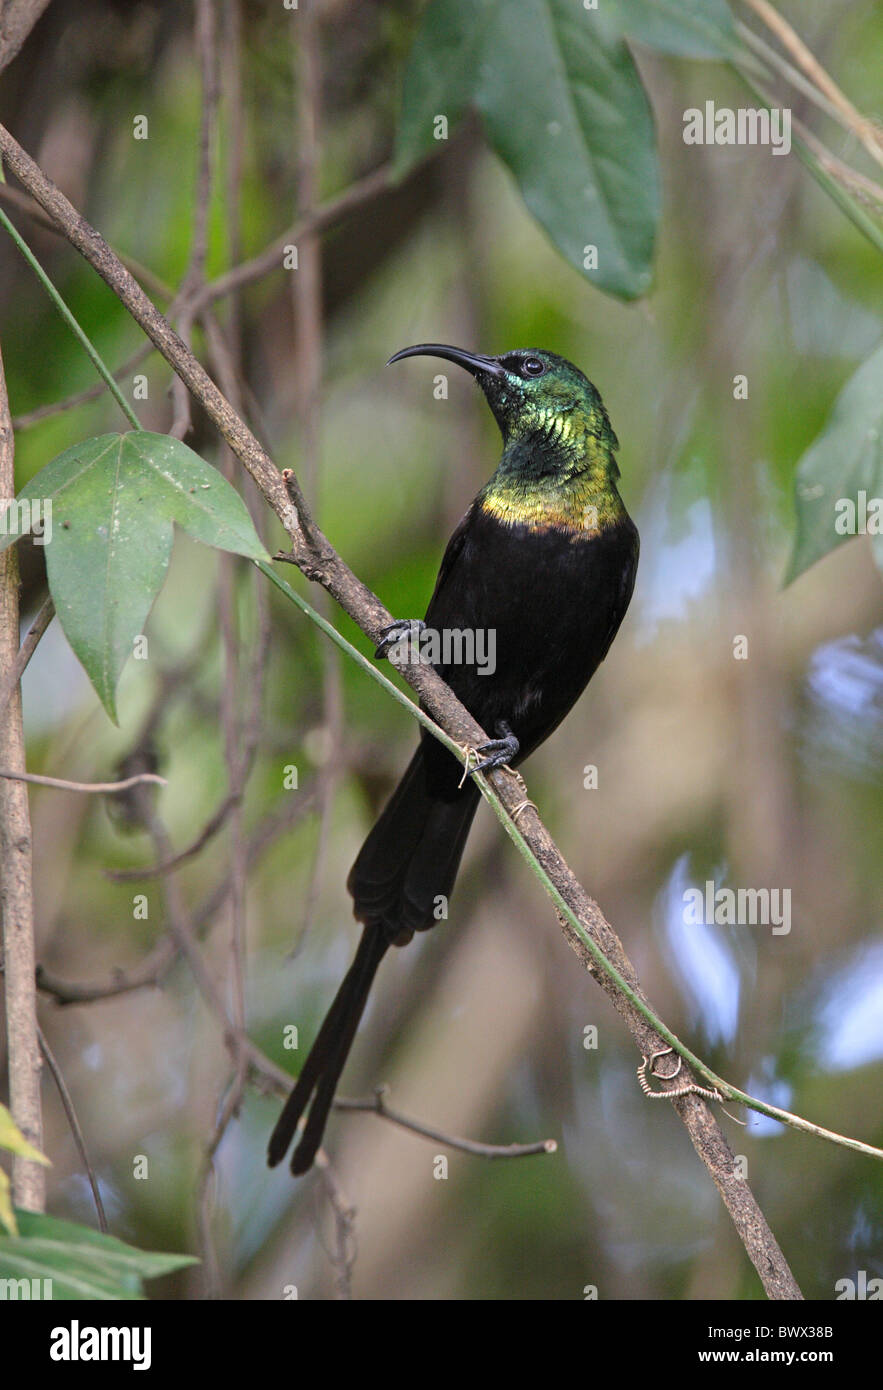 Bronze Sunbird (Nectarinia kilimensis kilimensis) adult male, perched on twig, Nairobi, Kenya, october Stock Photo